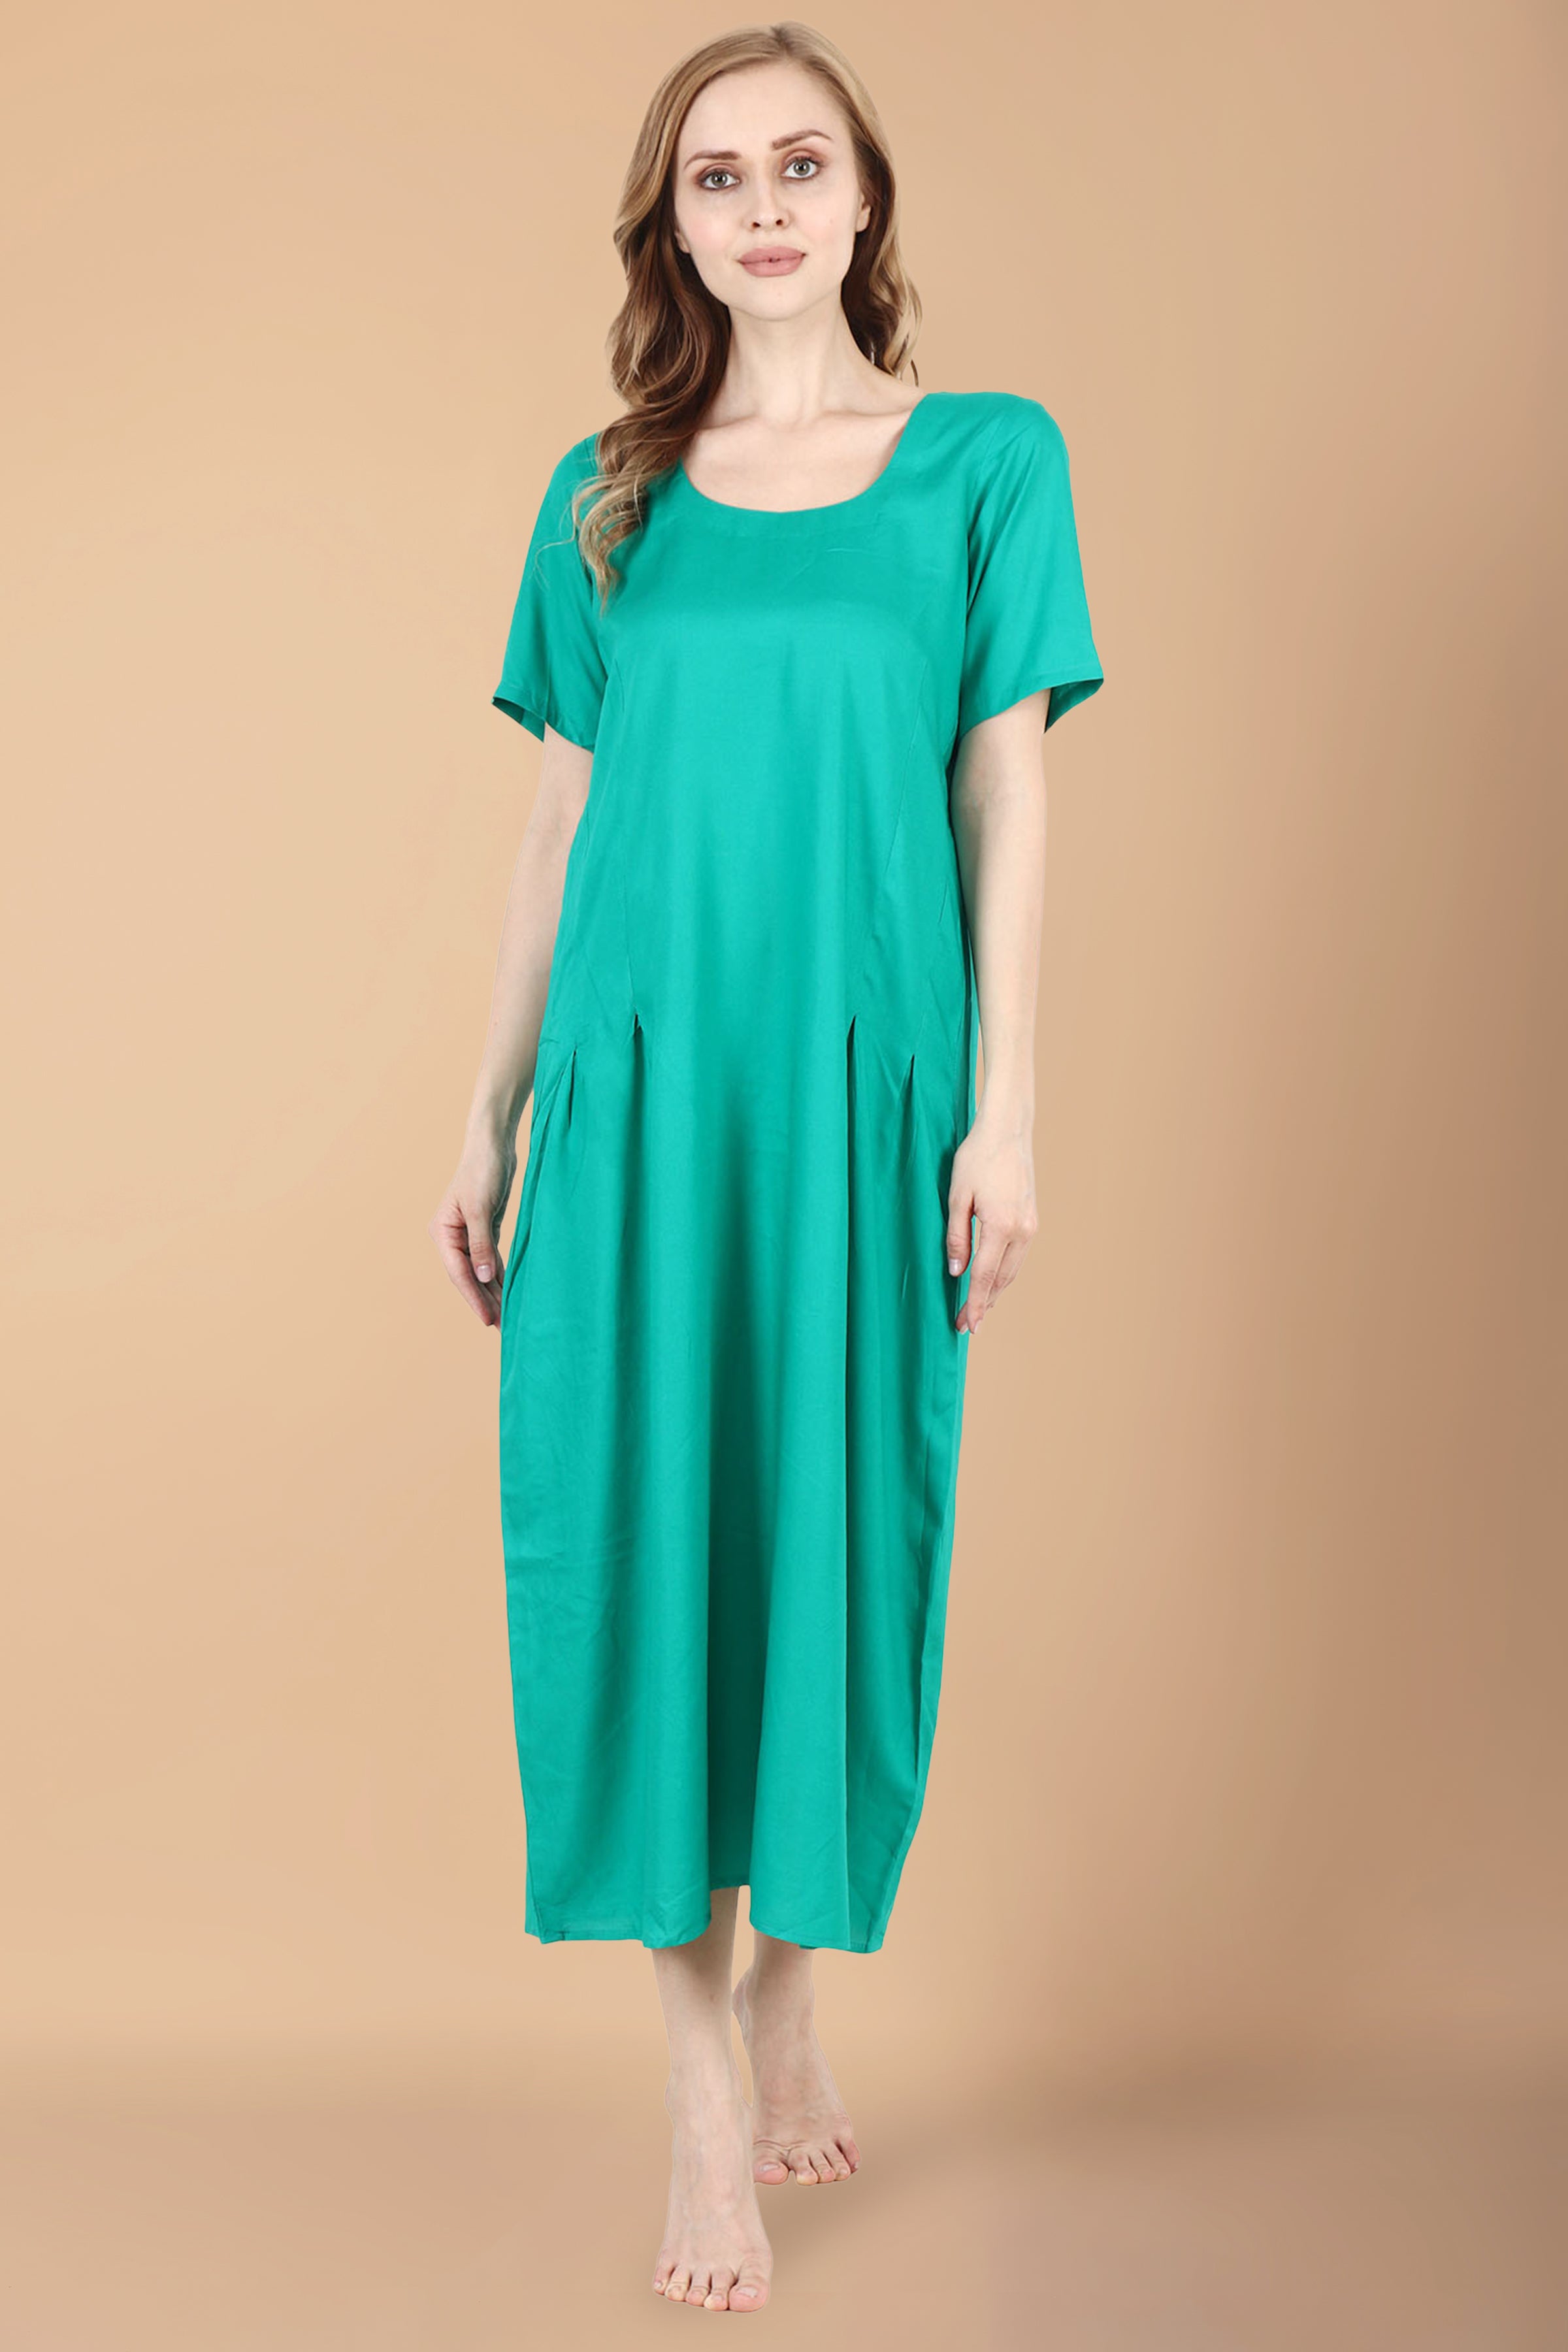 Beaded Turquoise Chiffon Thigh-high Slit Prom Dress - VQ